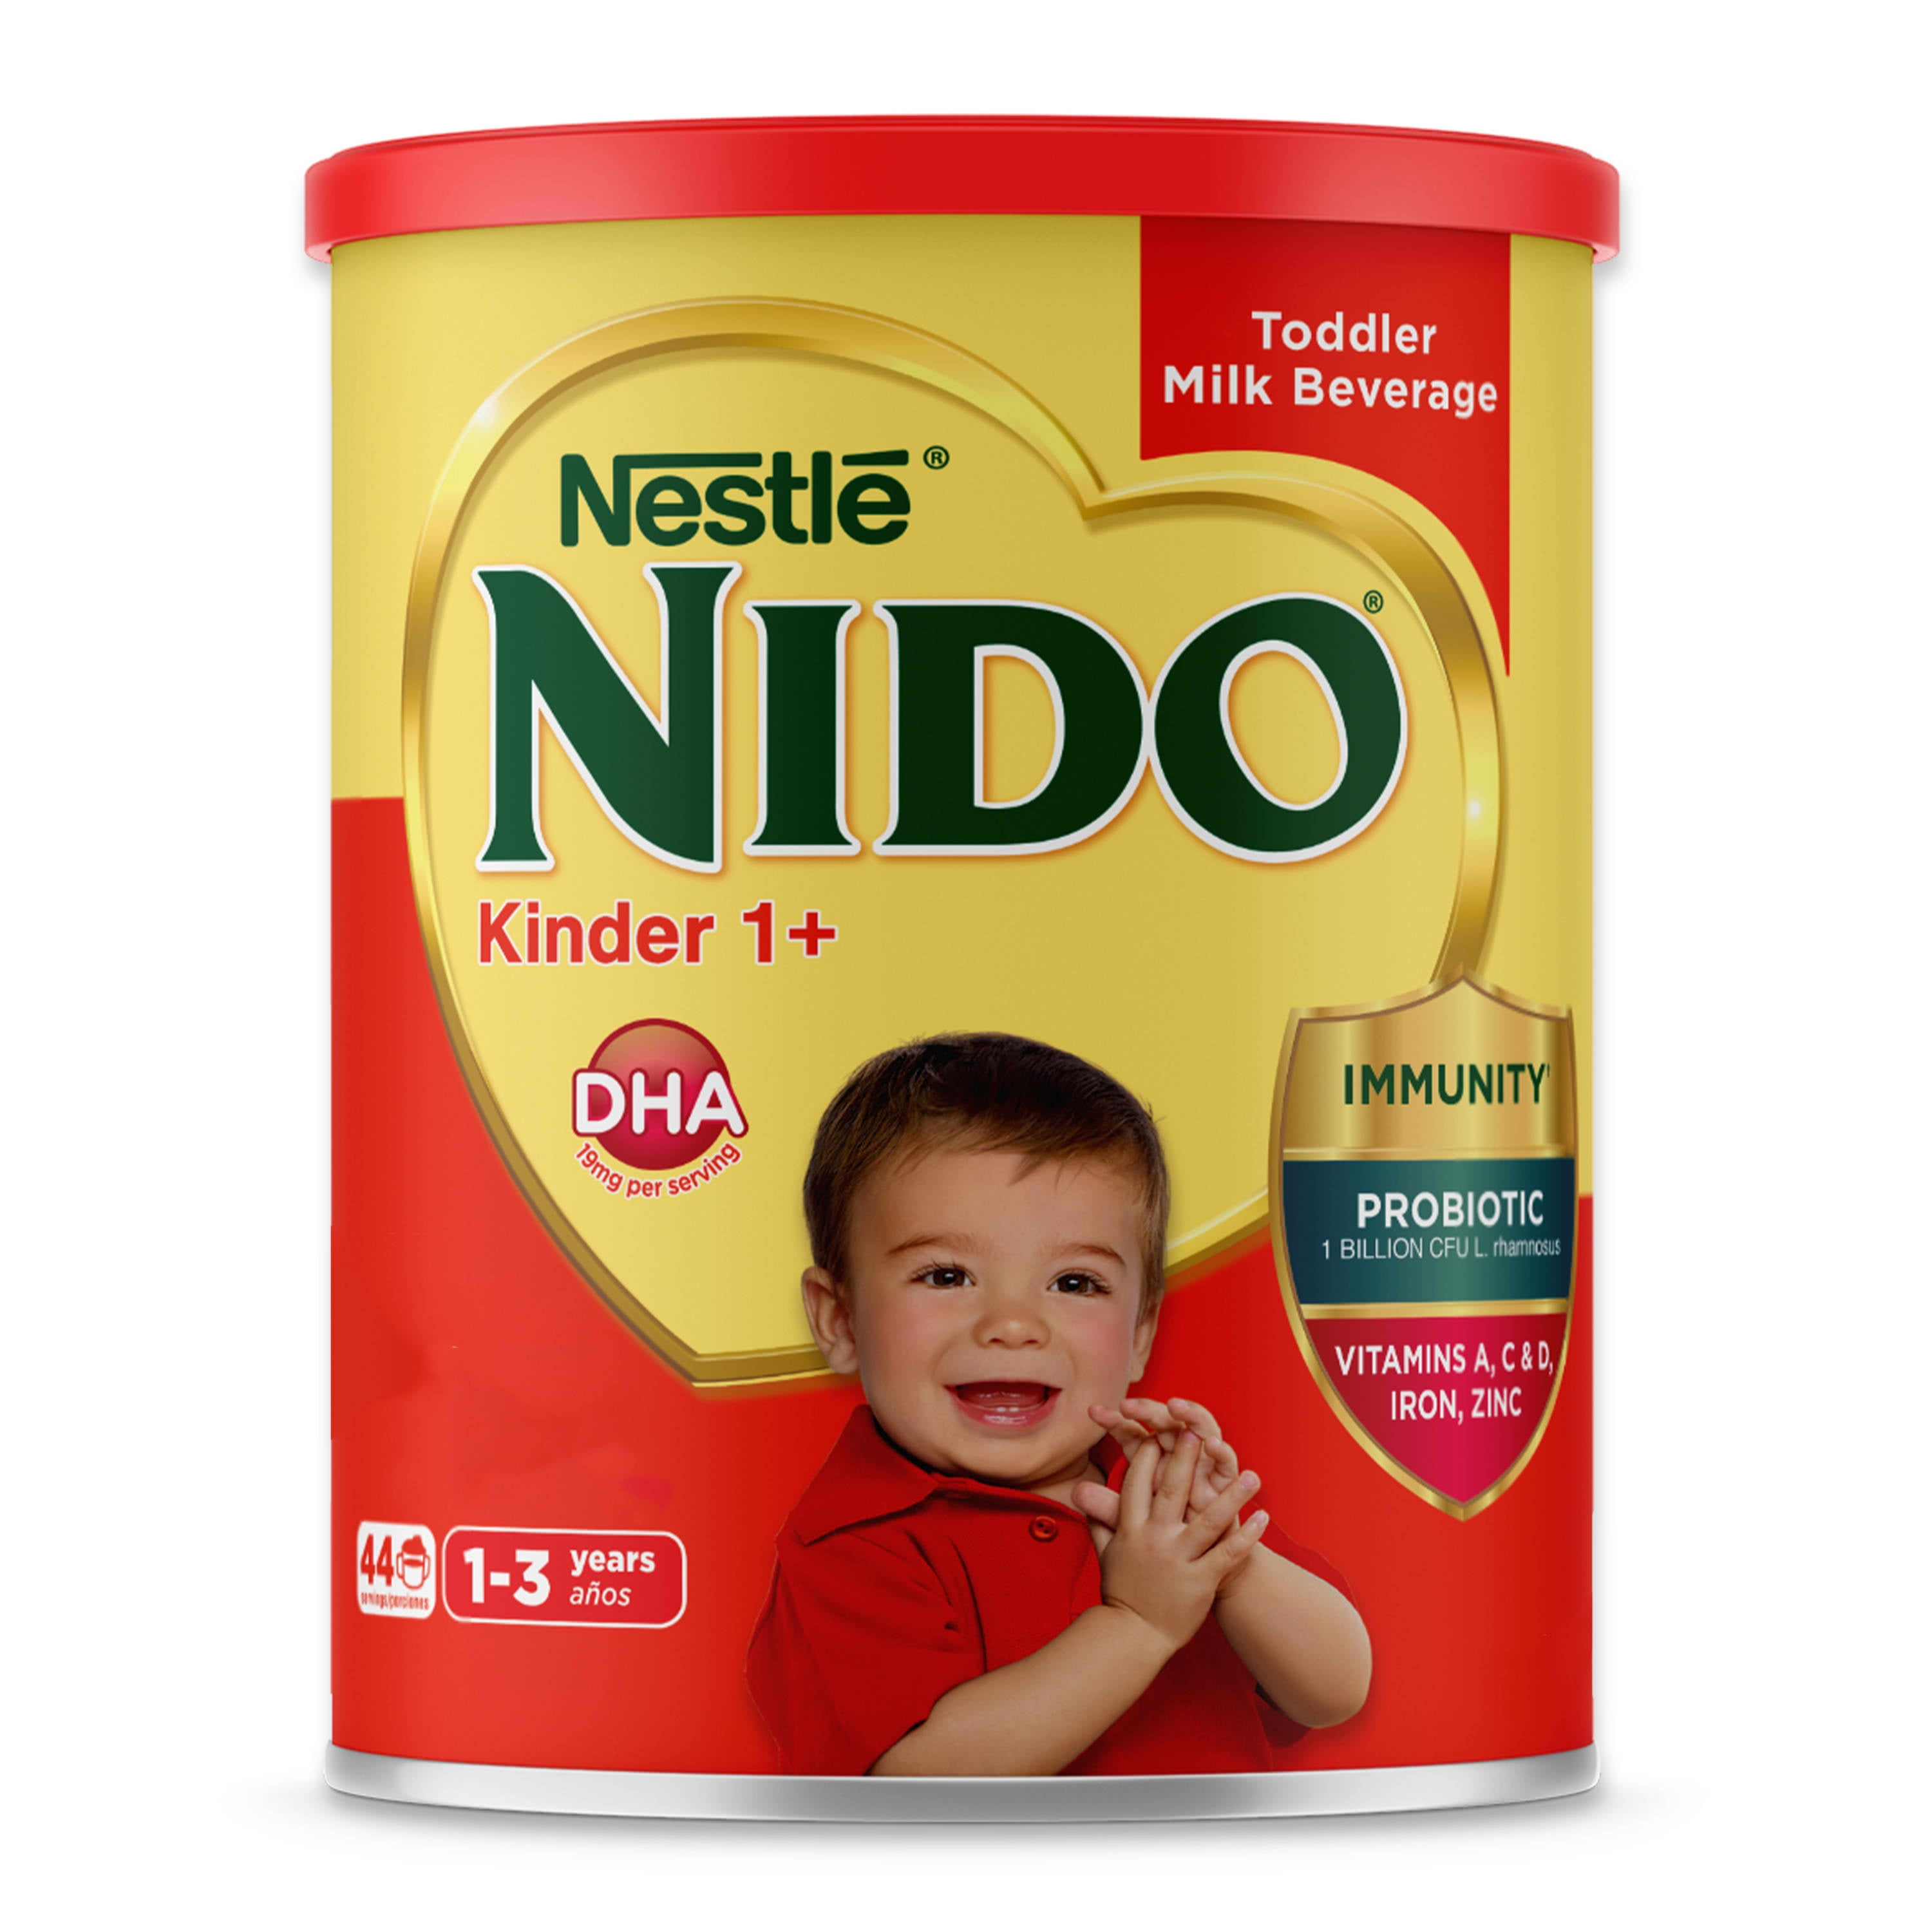 Nestle Nido Kinder 1 To 3 Years Toddler Powdered Milk Beverage, 56.4 Oz